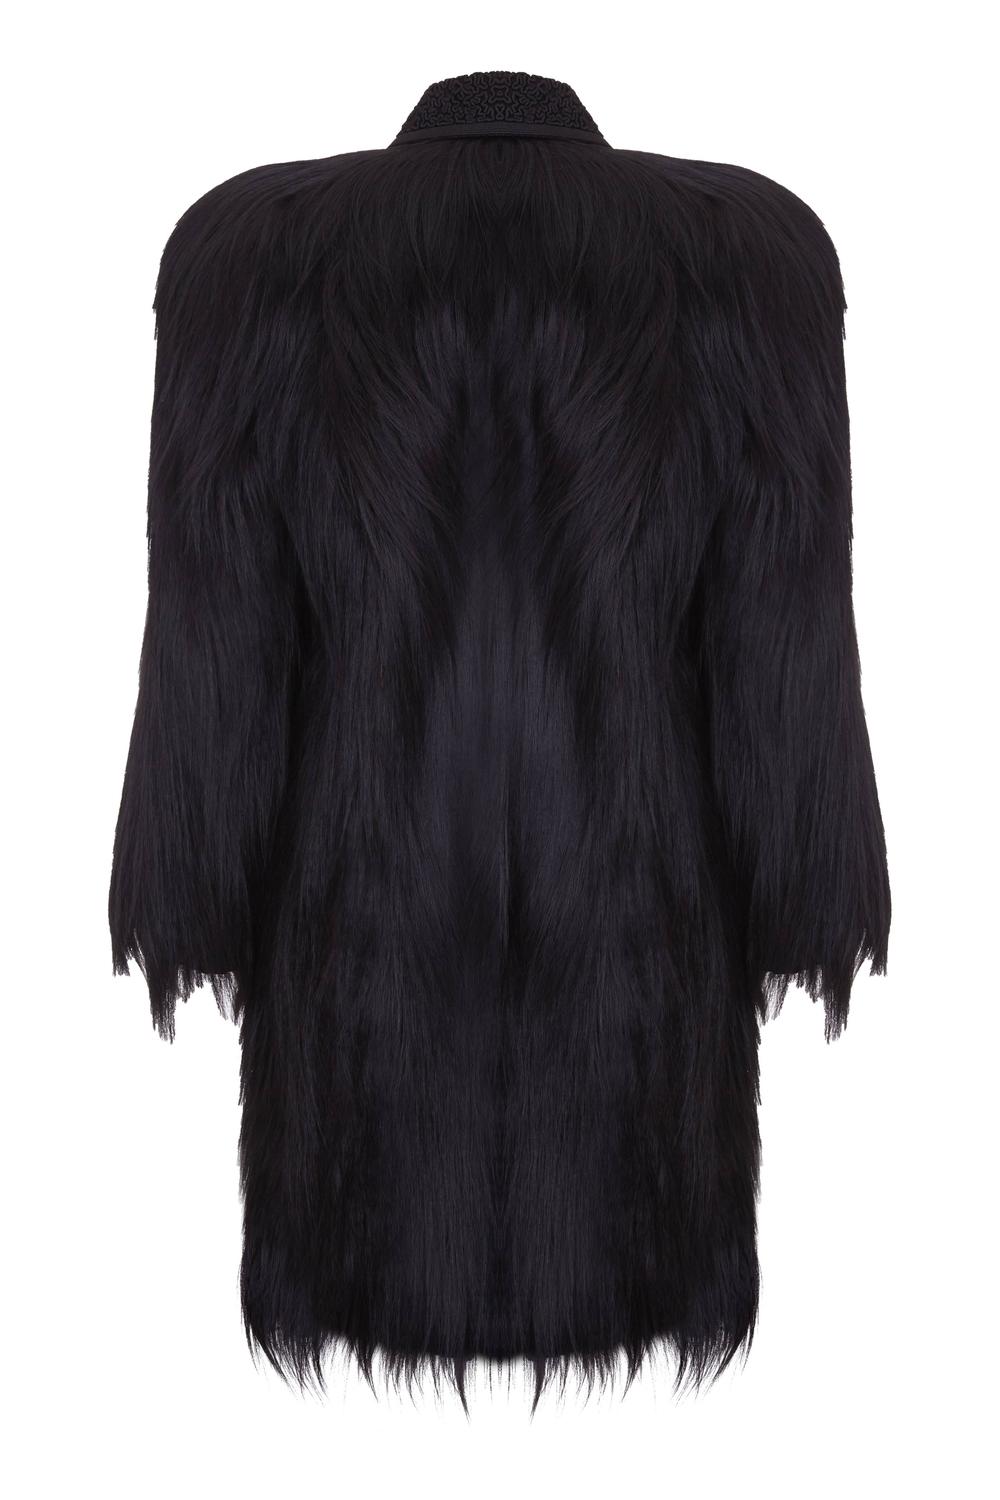 1940s Colobus Monkey Black Fur Coat For Sale at 1stdibs